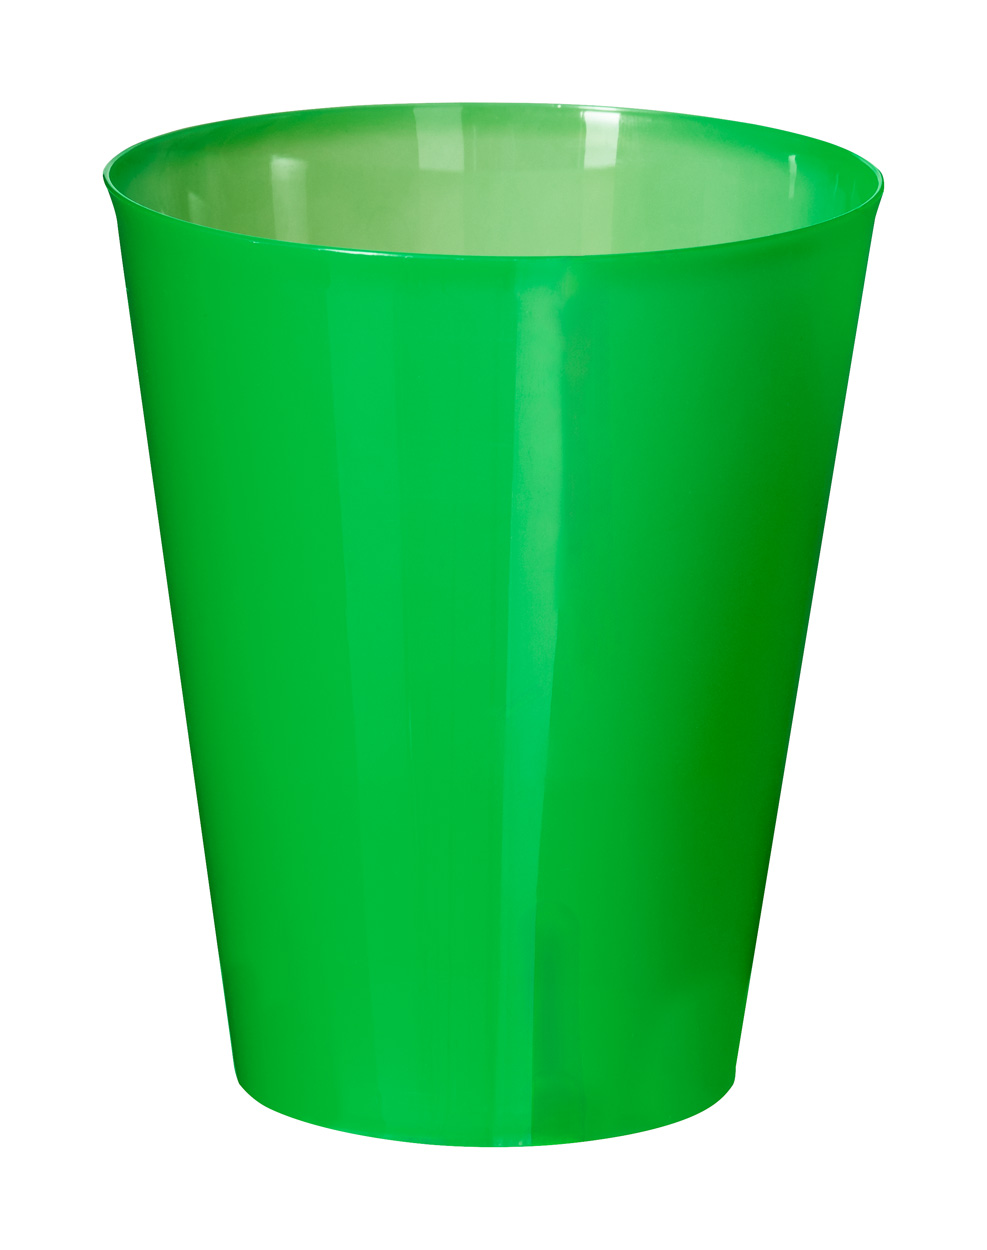 Colorbert reusable cup for events - Grün